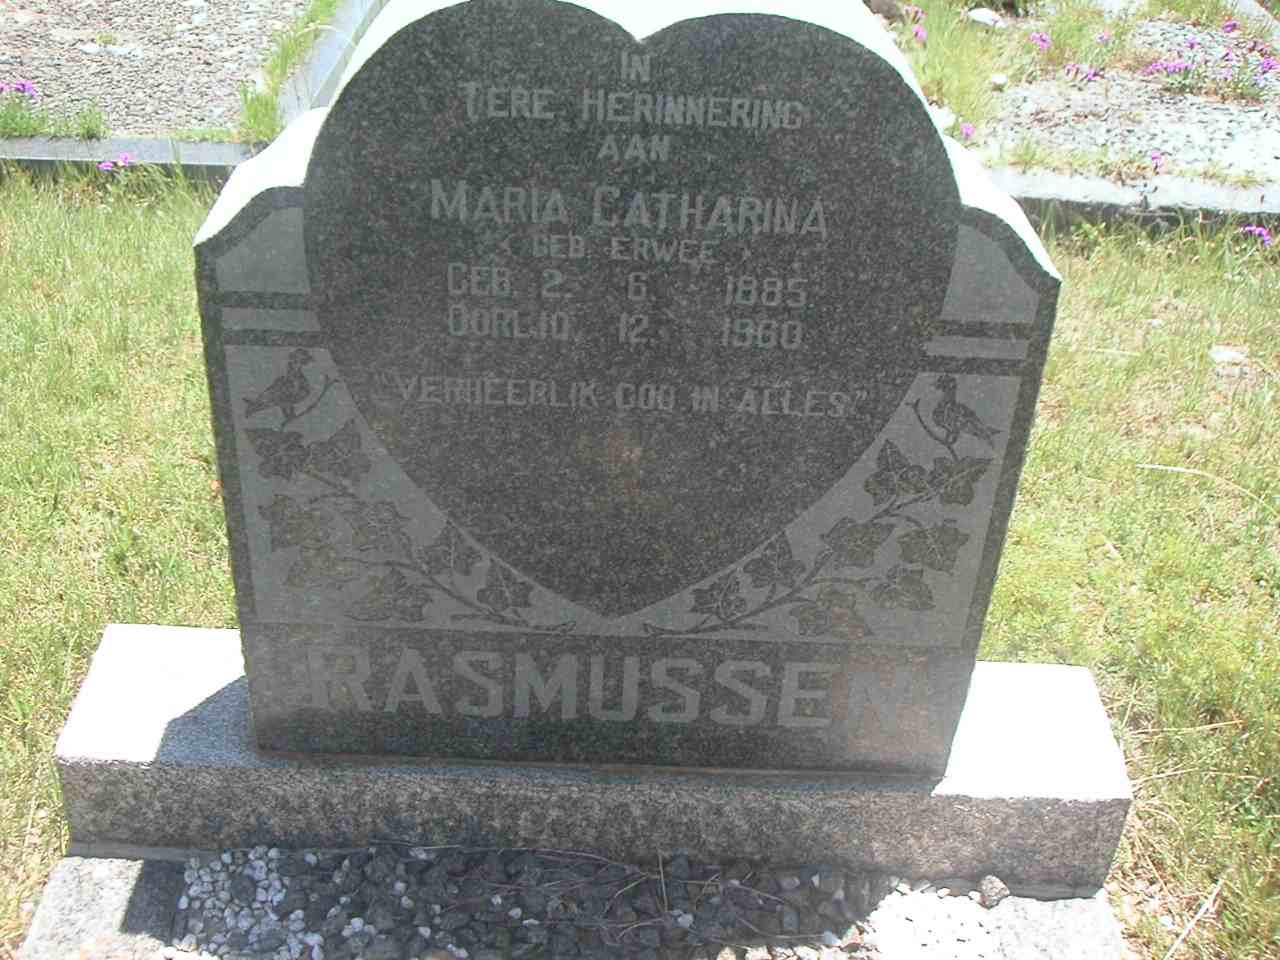 RASMUSSEN Maria Catharina nee ERWEE 1885-1960